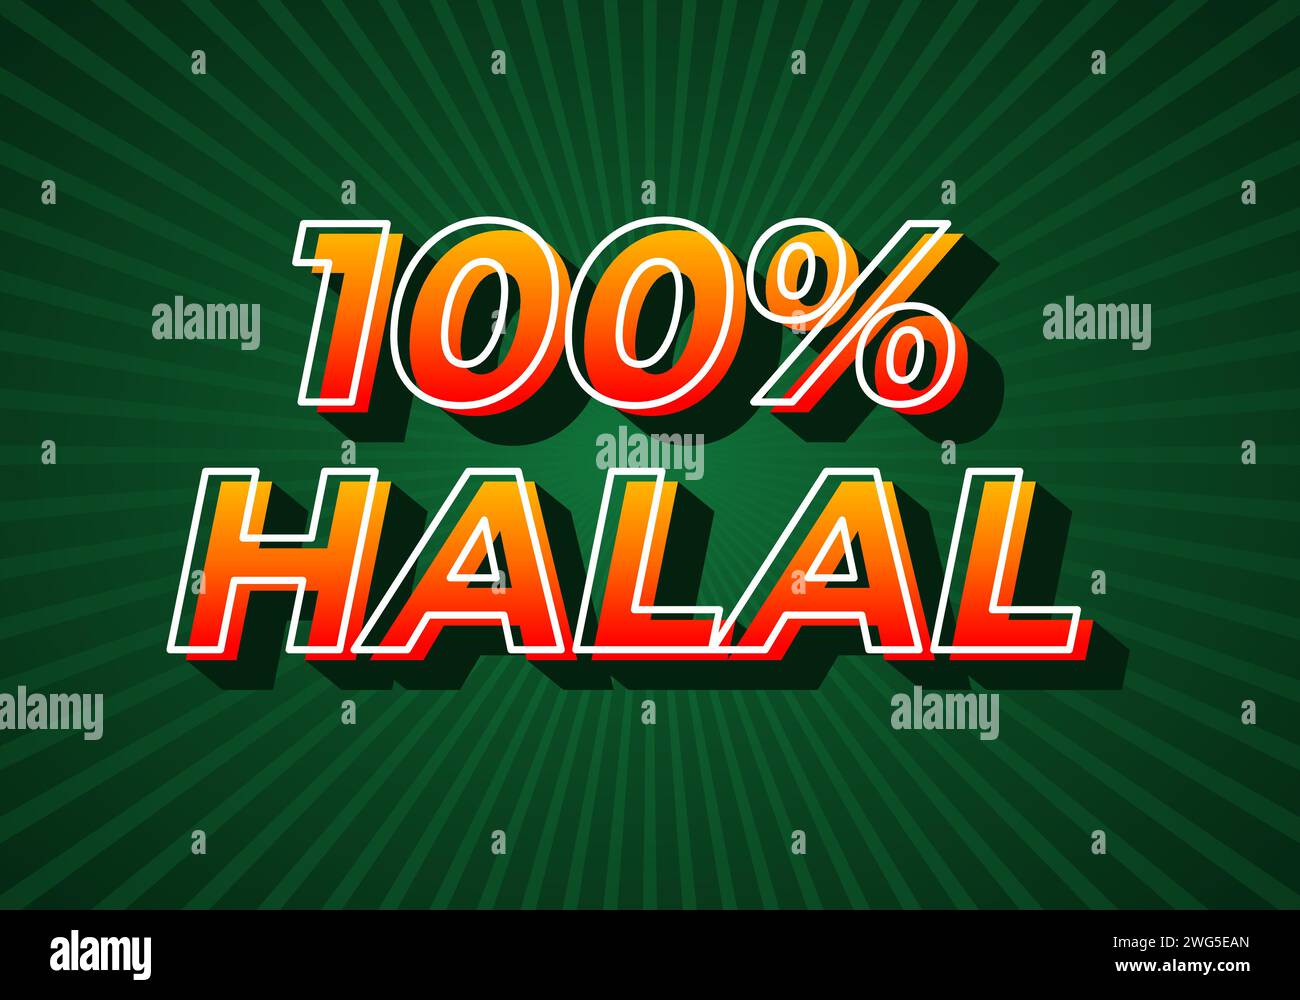 100% halal. Text effect design in gradient yellow red color. 3D look. dark green background Stock Vector